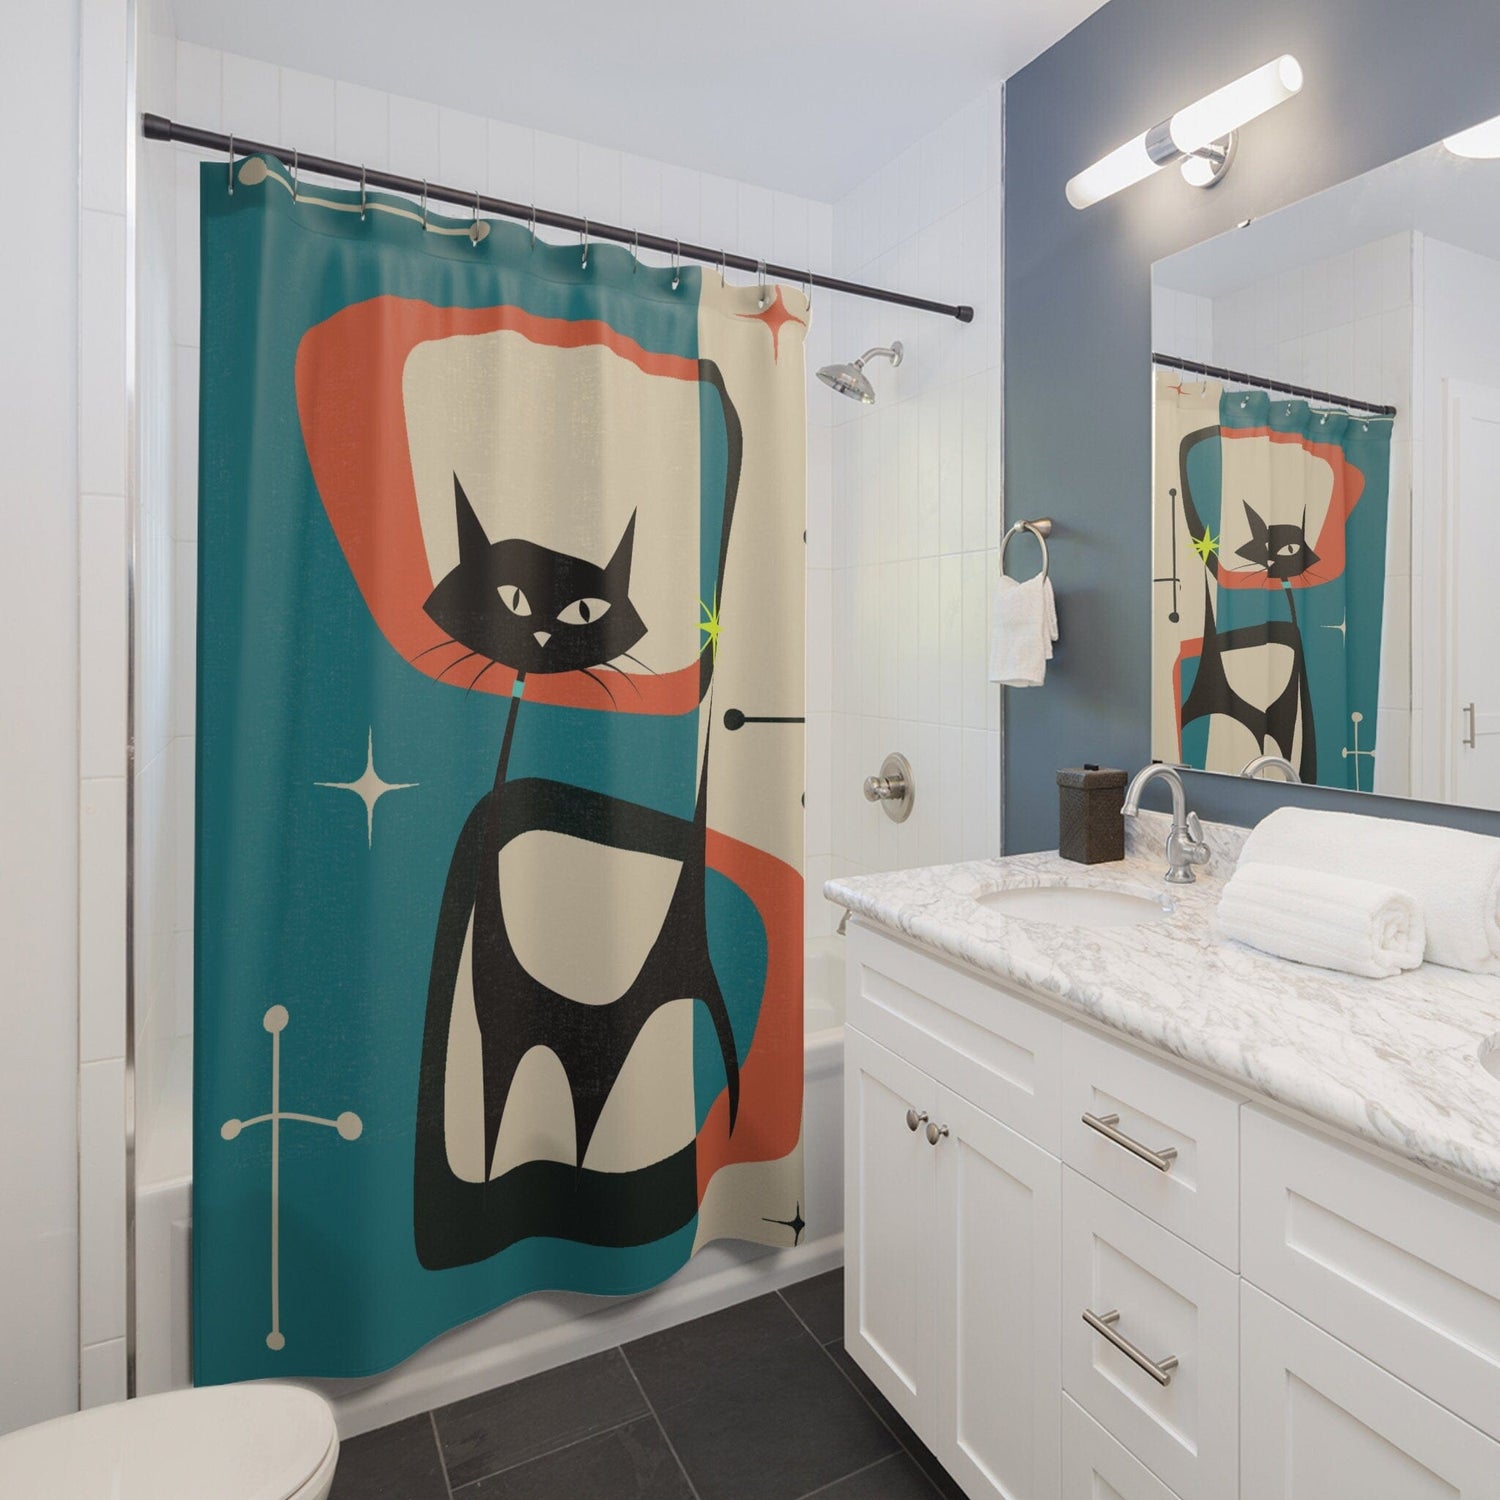 Kate McEnroe New York Atomic Cat Shower Curtains, Mid Century Modern Geometric Teal Blue, Burnt Orange, Cream MCM Starburst Bath Curtains, Retro Bathroom DecorShower CurtainsS40 - BLU - CAT - 7X7